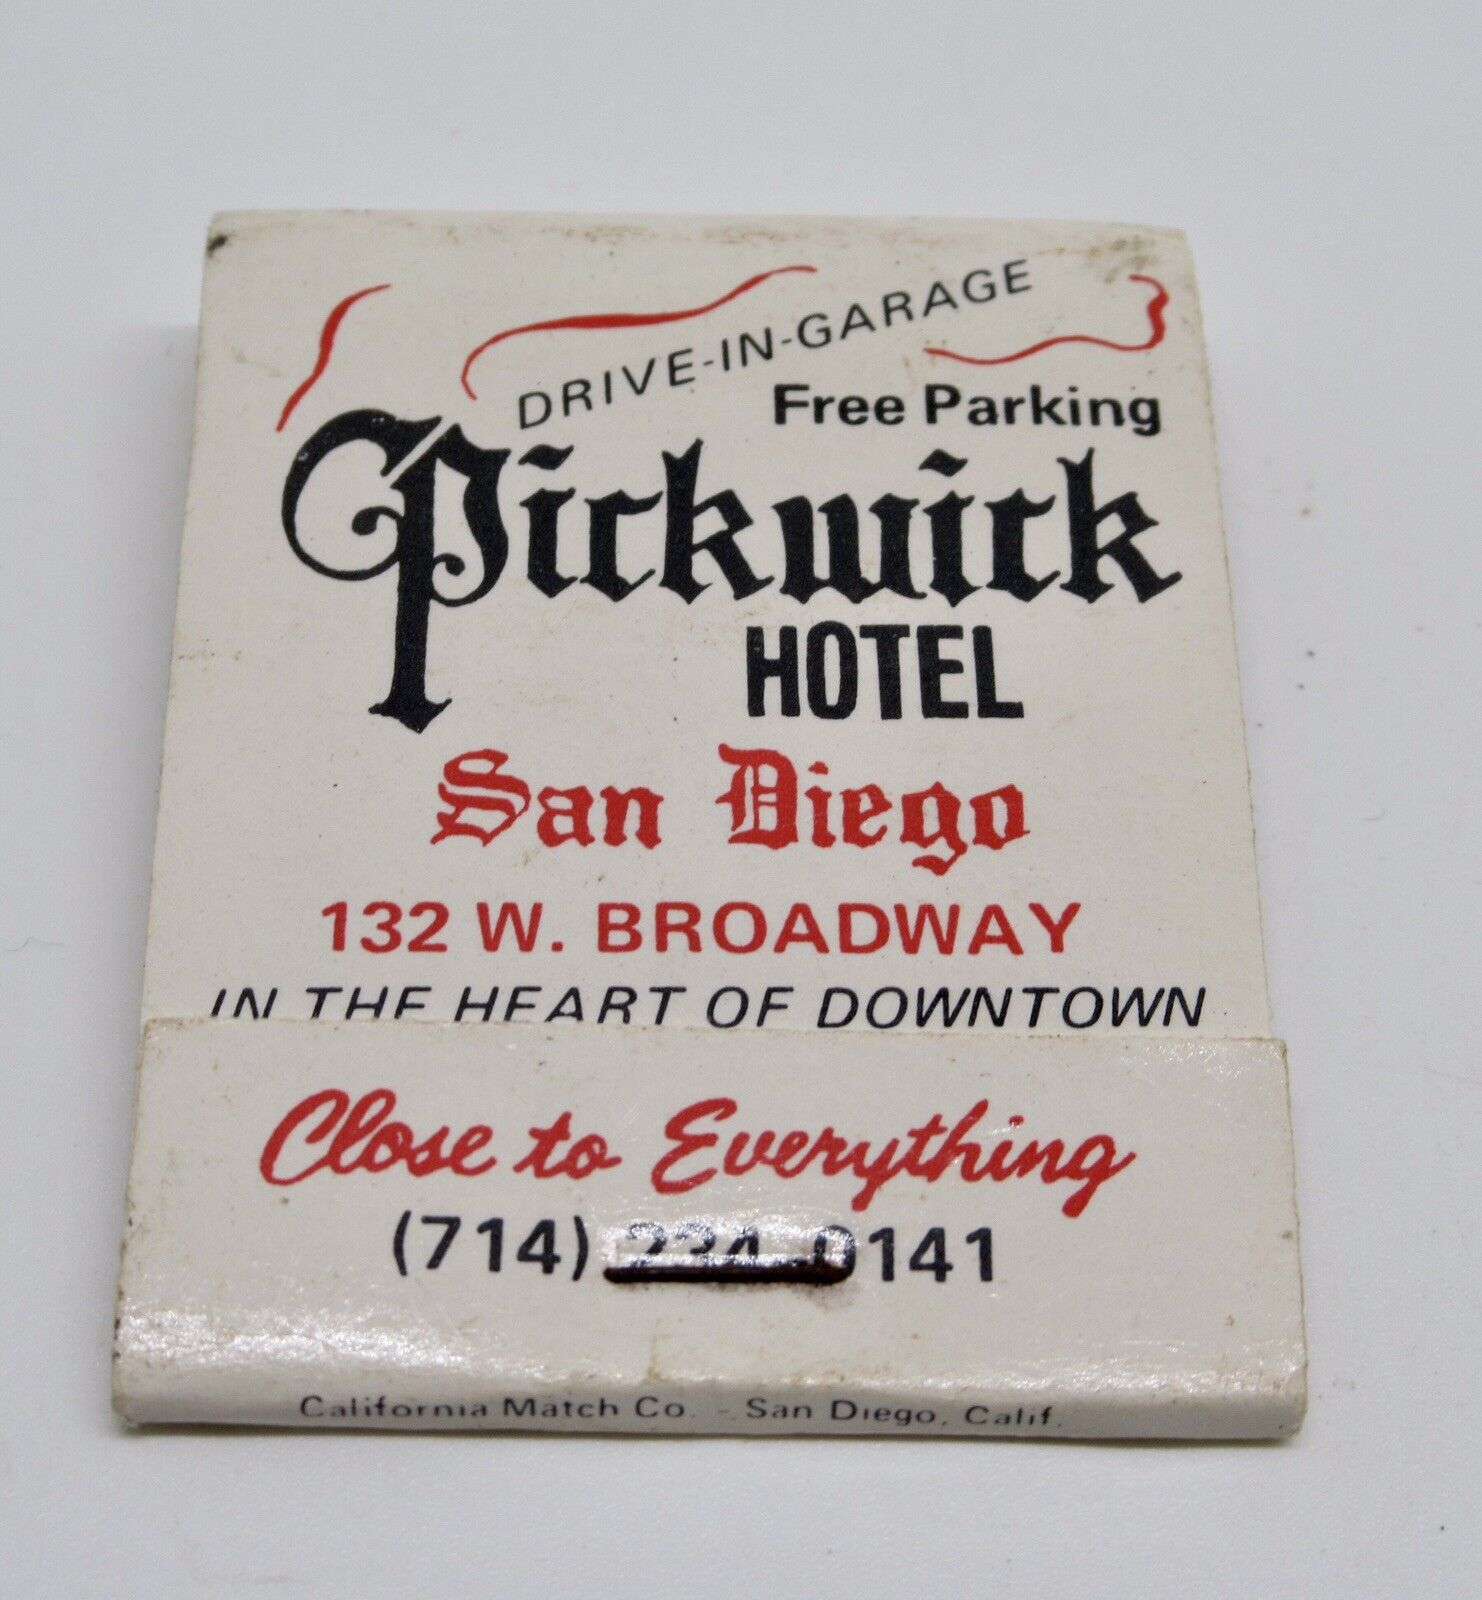 Pickwick Hotel San Diego Downtown 132 W. Broadway California FULL Matchbook